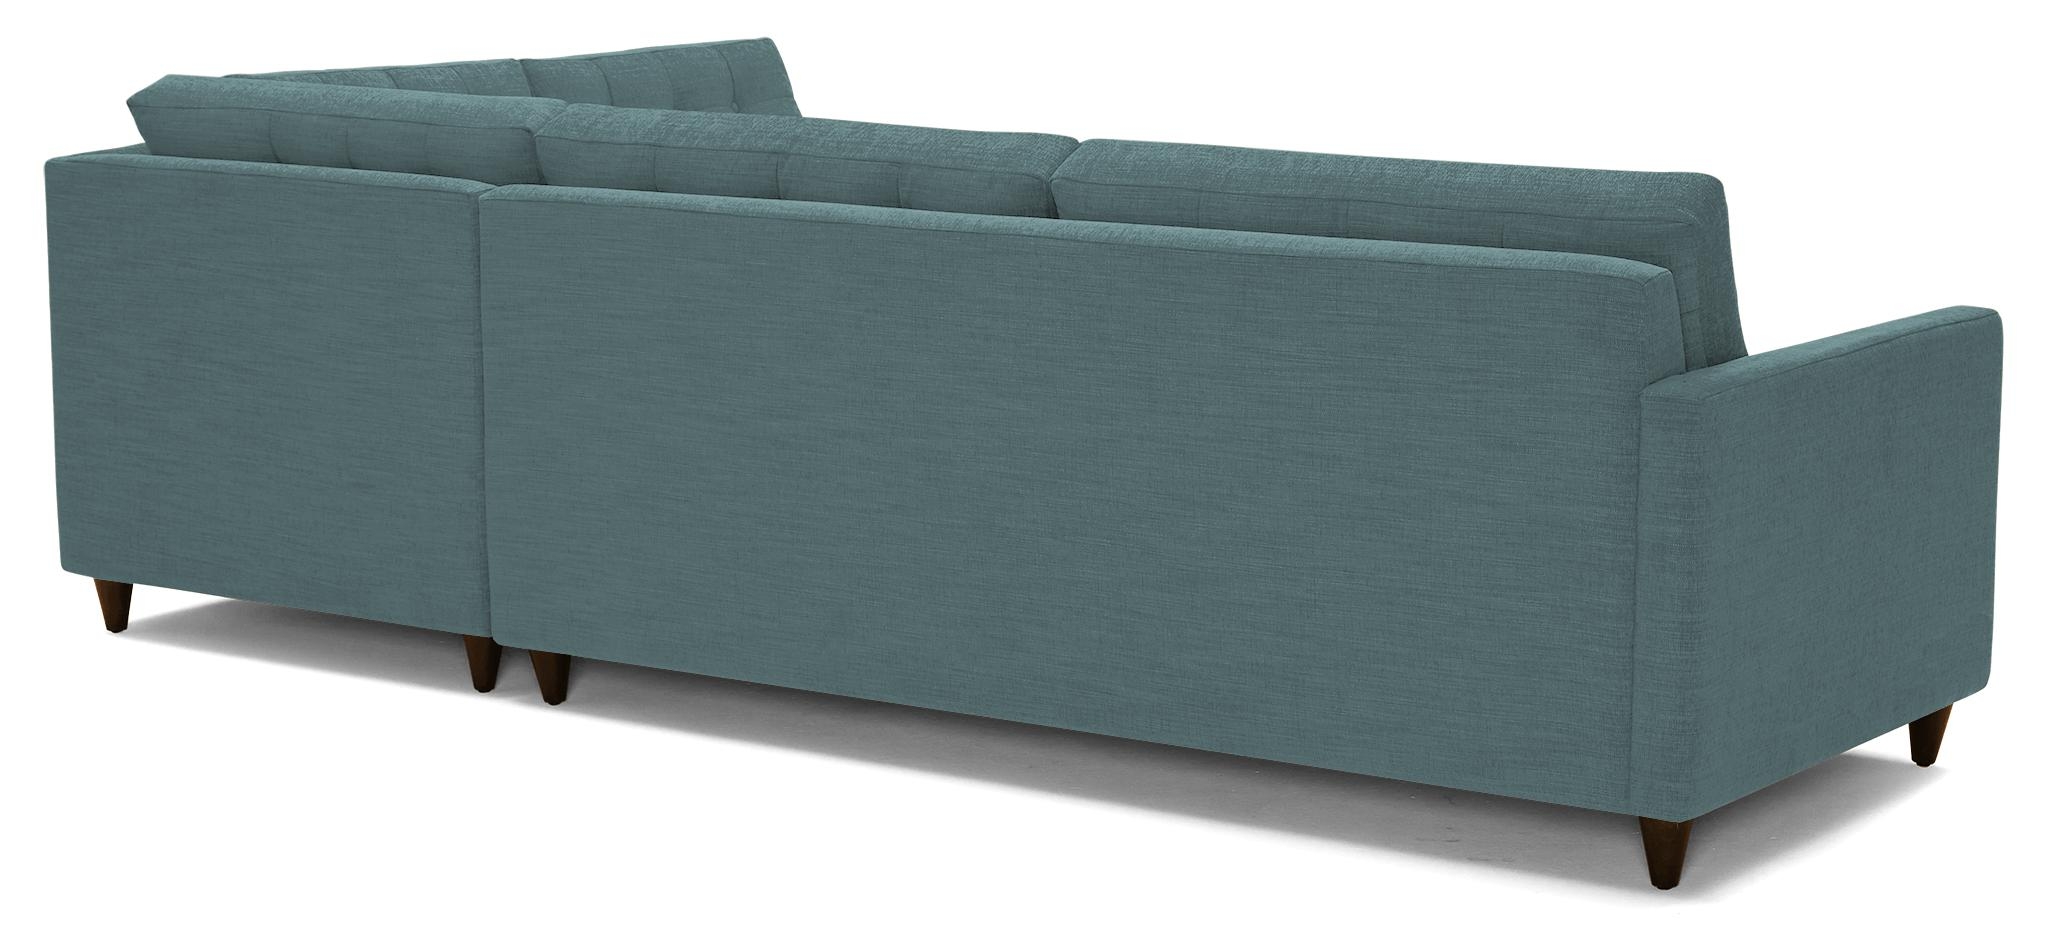 Blue Eliot Mid Century Modern Bumper Sleeper Sectional - Dawson Slate - Mocha - Left - Image 3